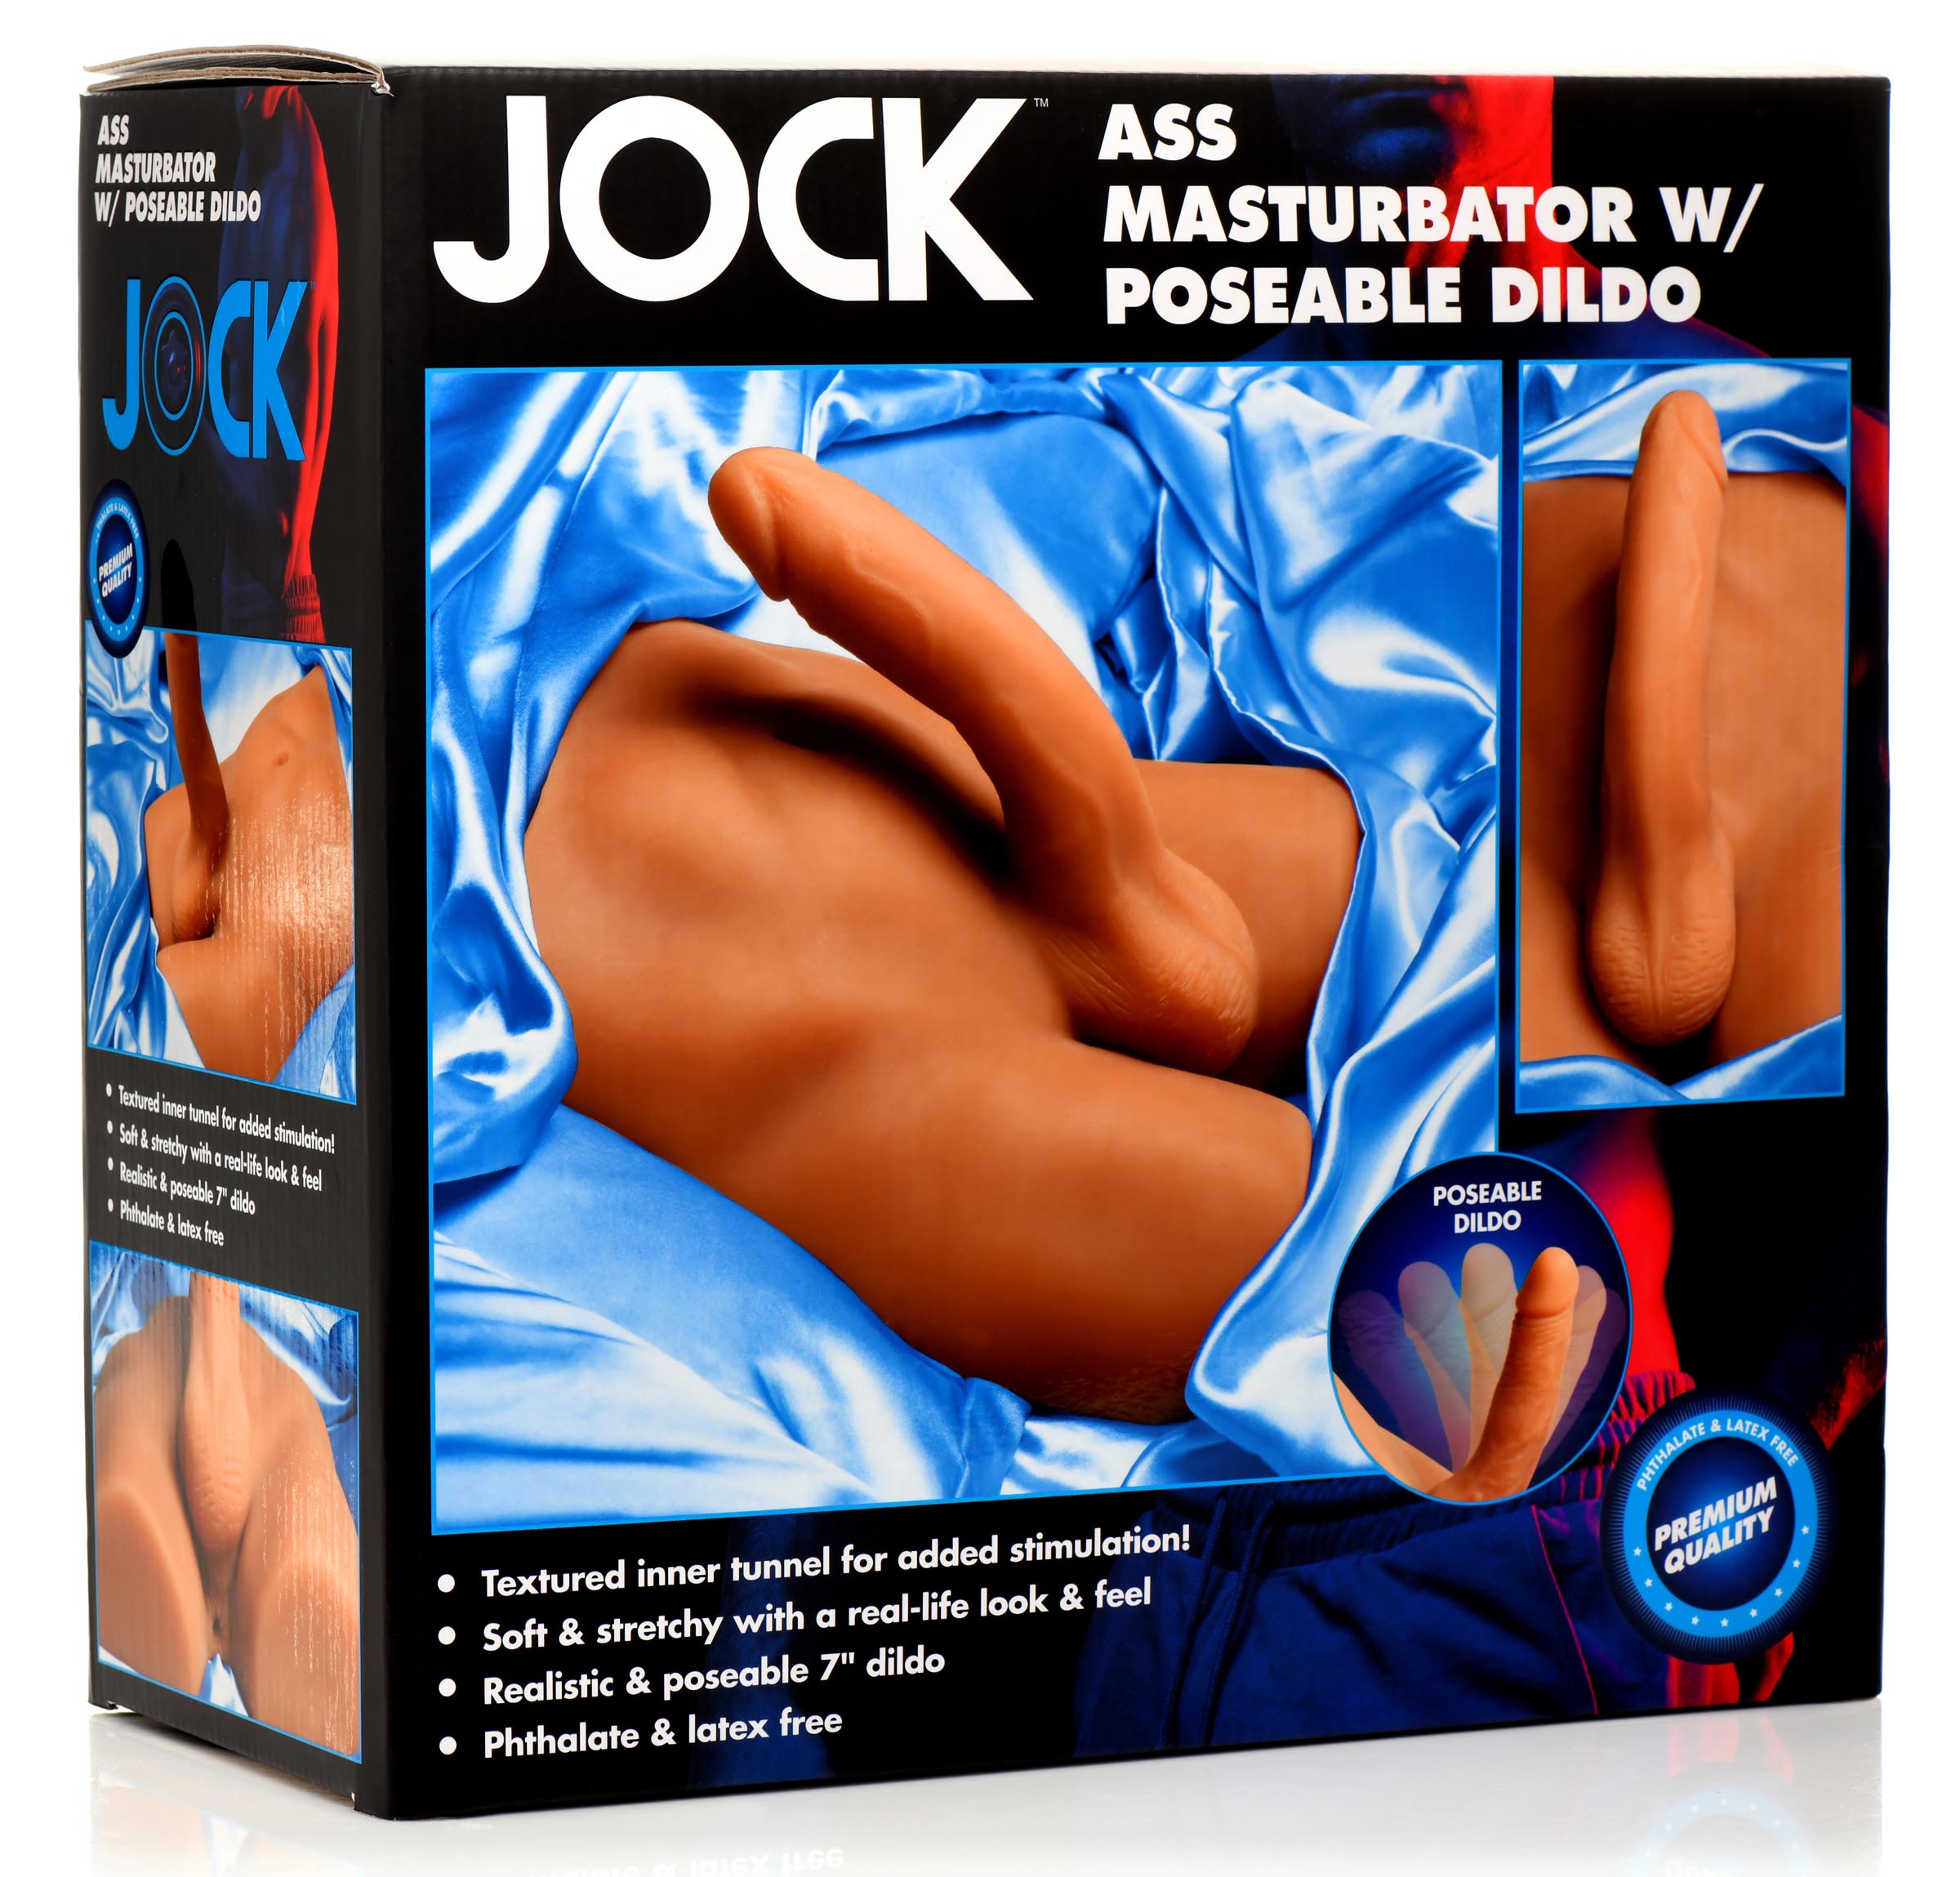 JOCK Male Ass Masturbator with Posable Dildo